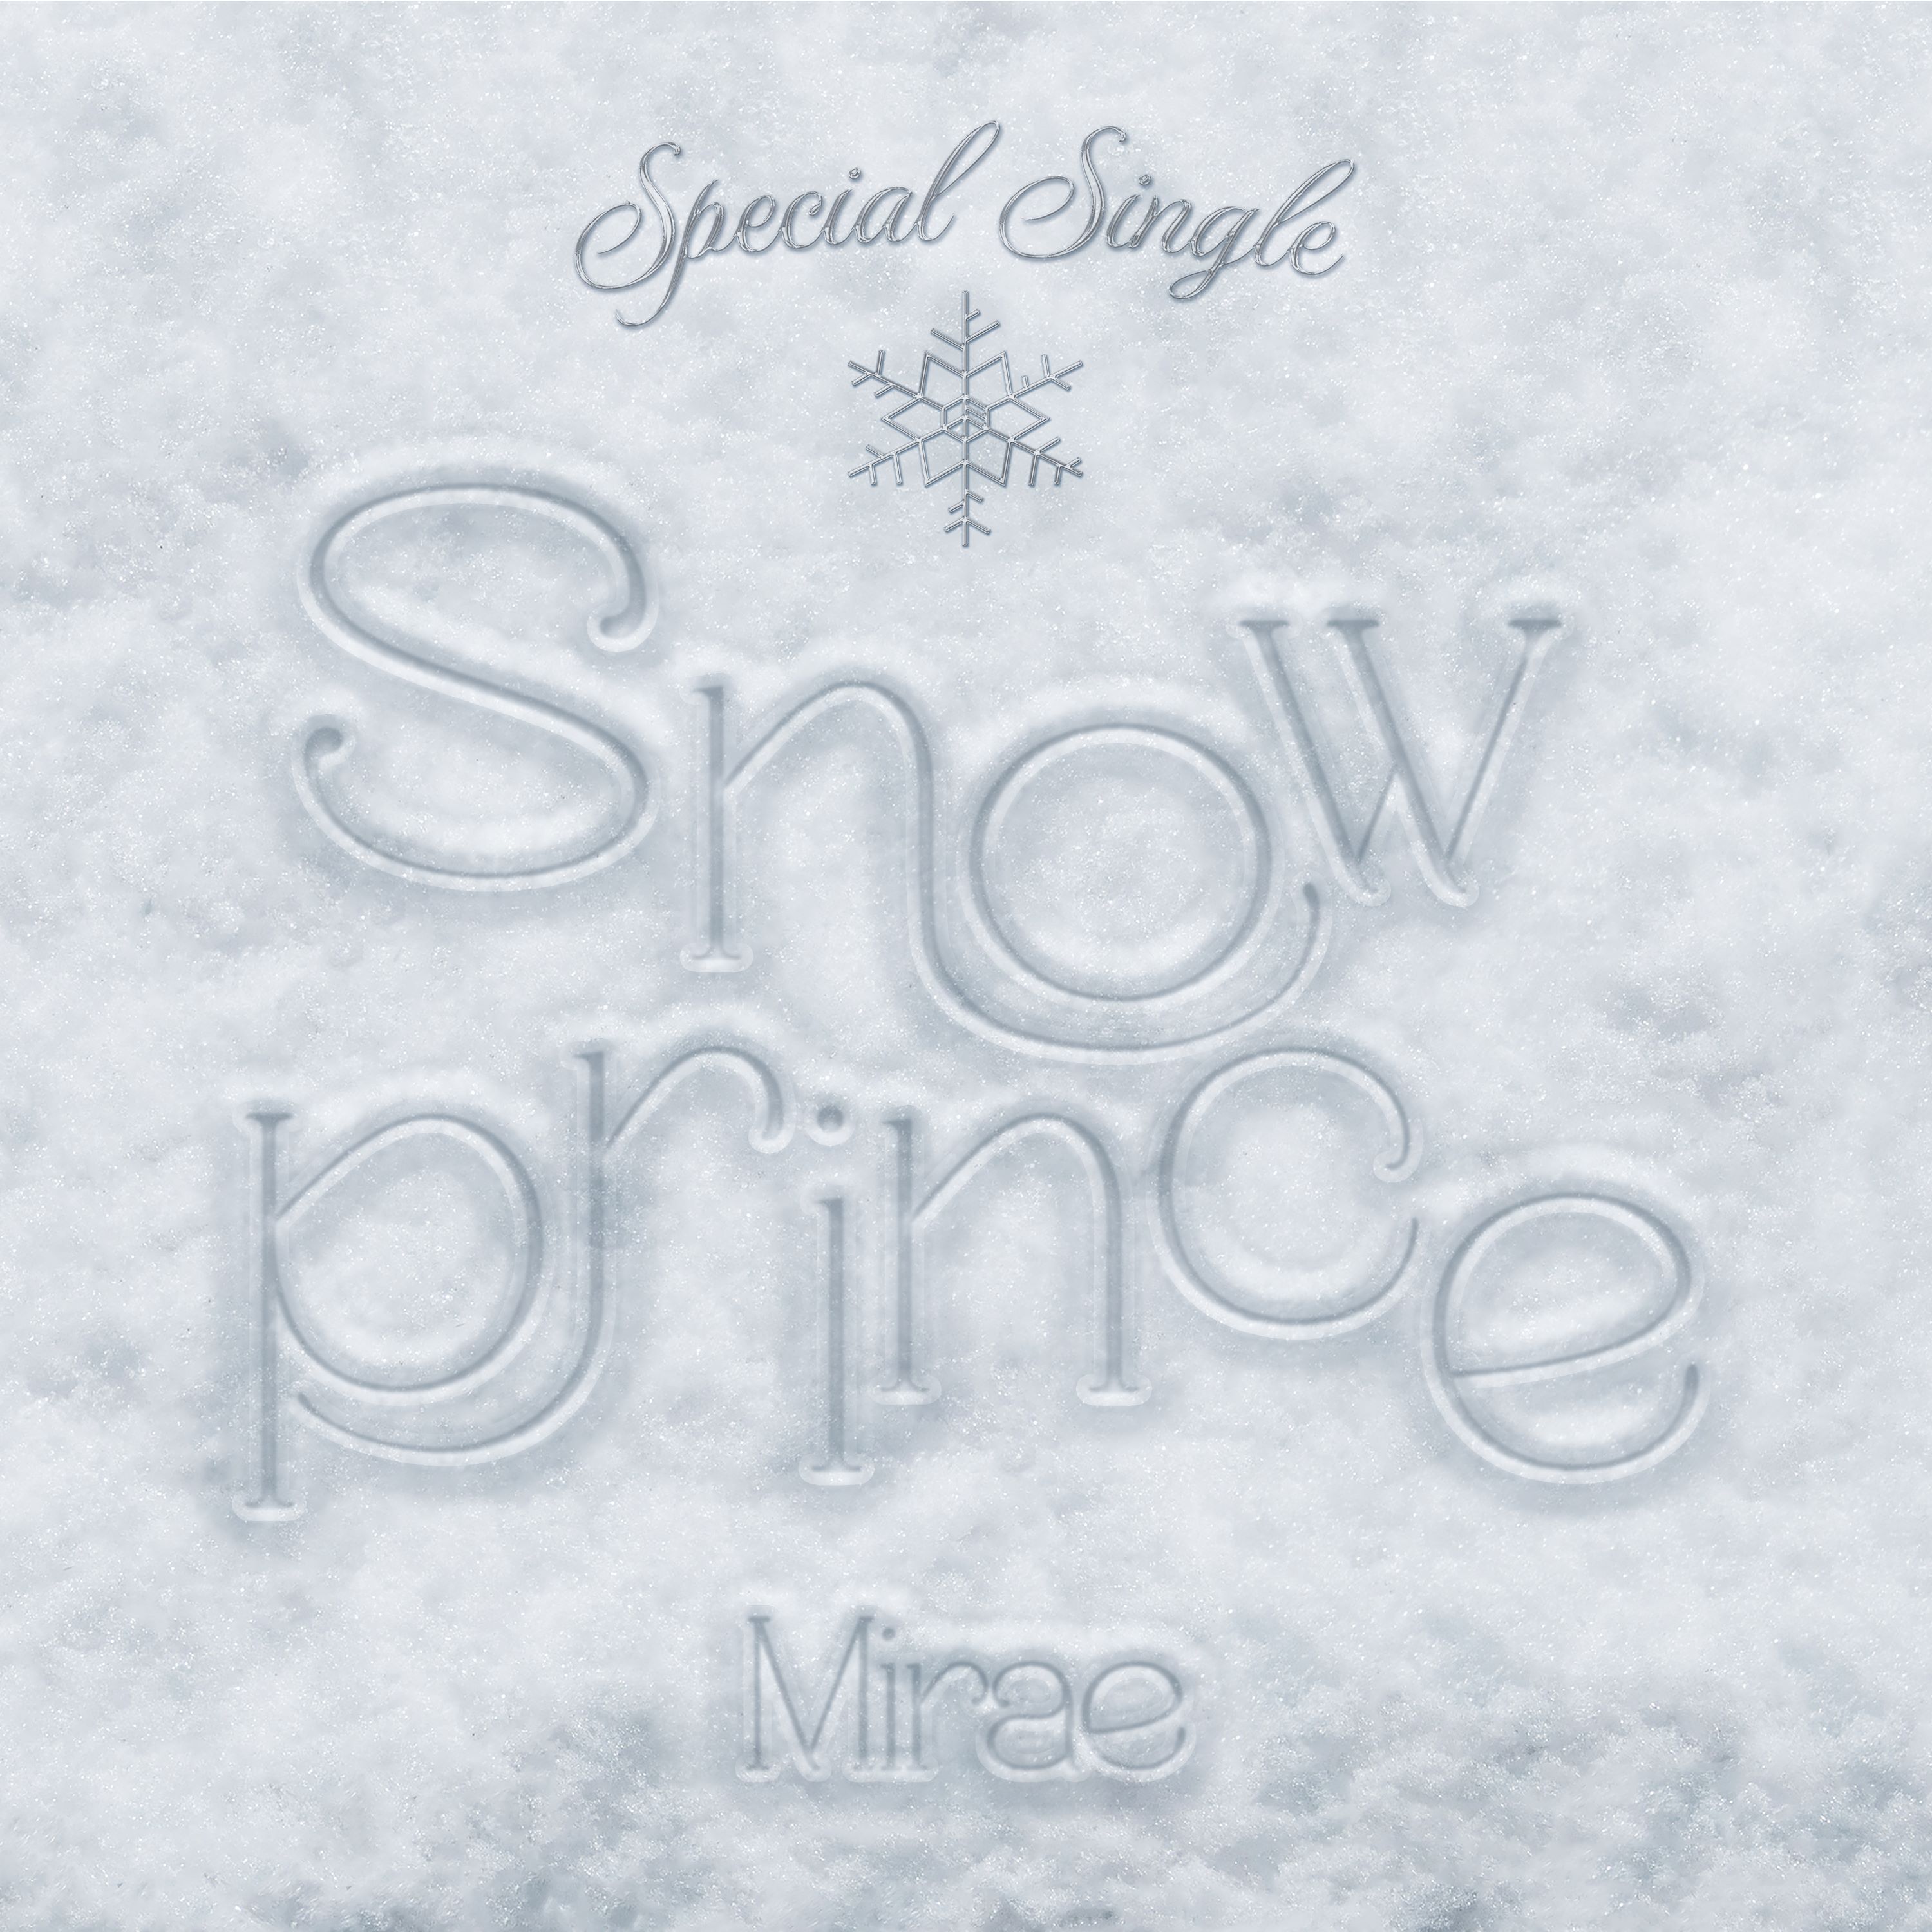 MIRAE Snow Prince Cover.jpg